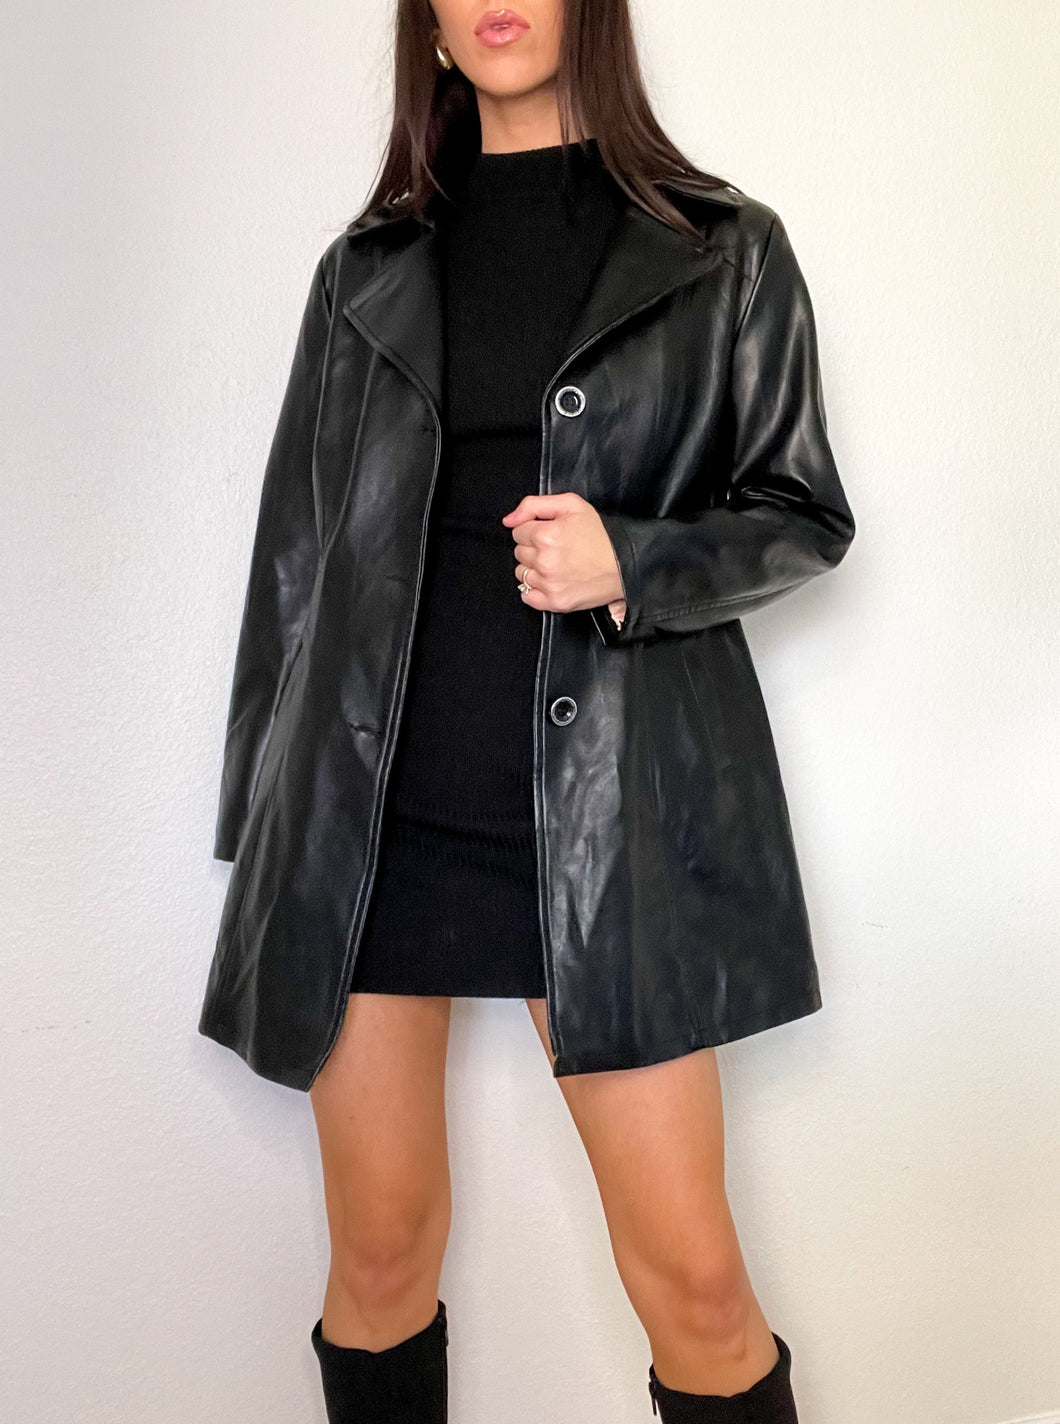 Black Genuine Leather Trench Coat Jacket (M/L)